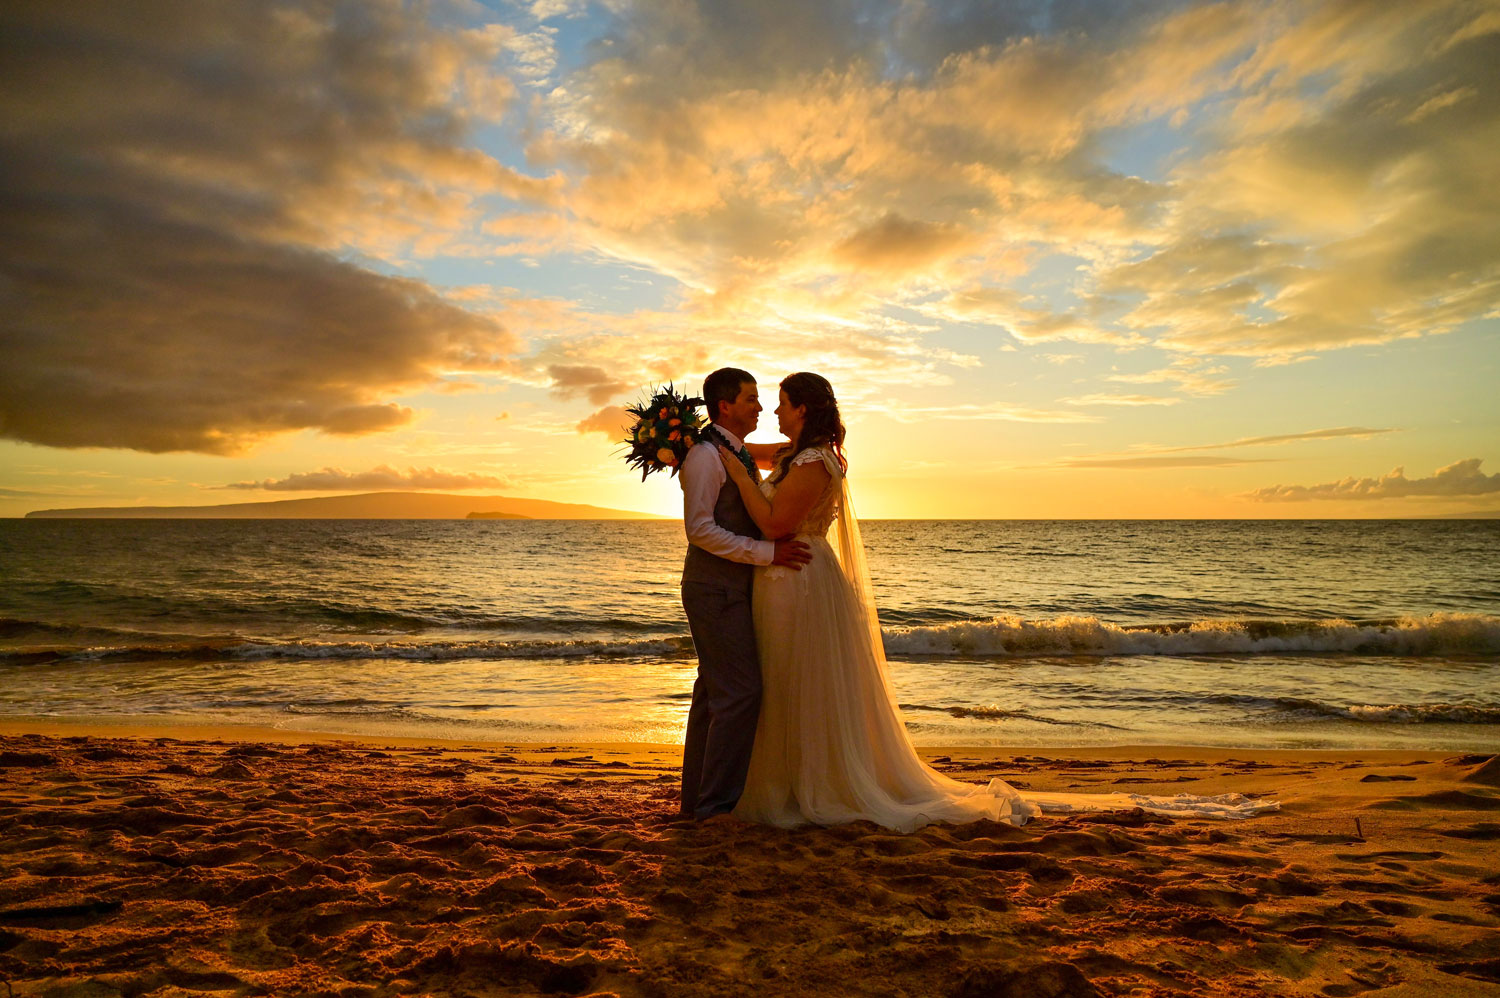 Maui Weddings from the Heart